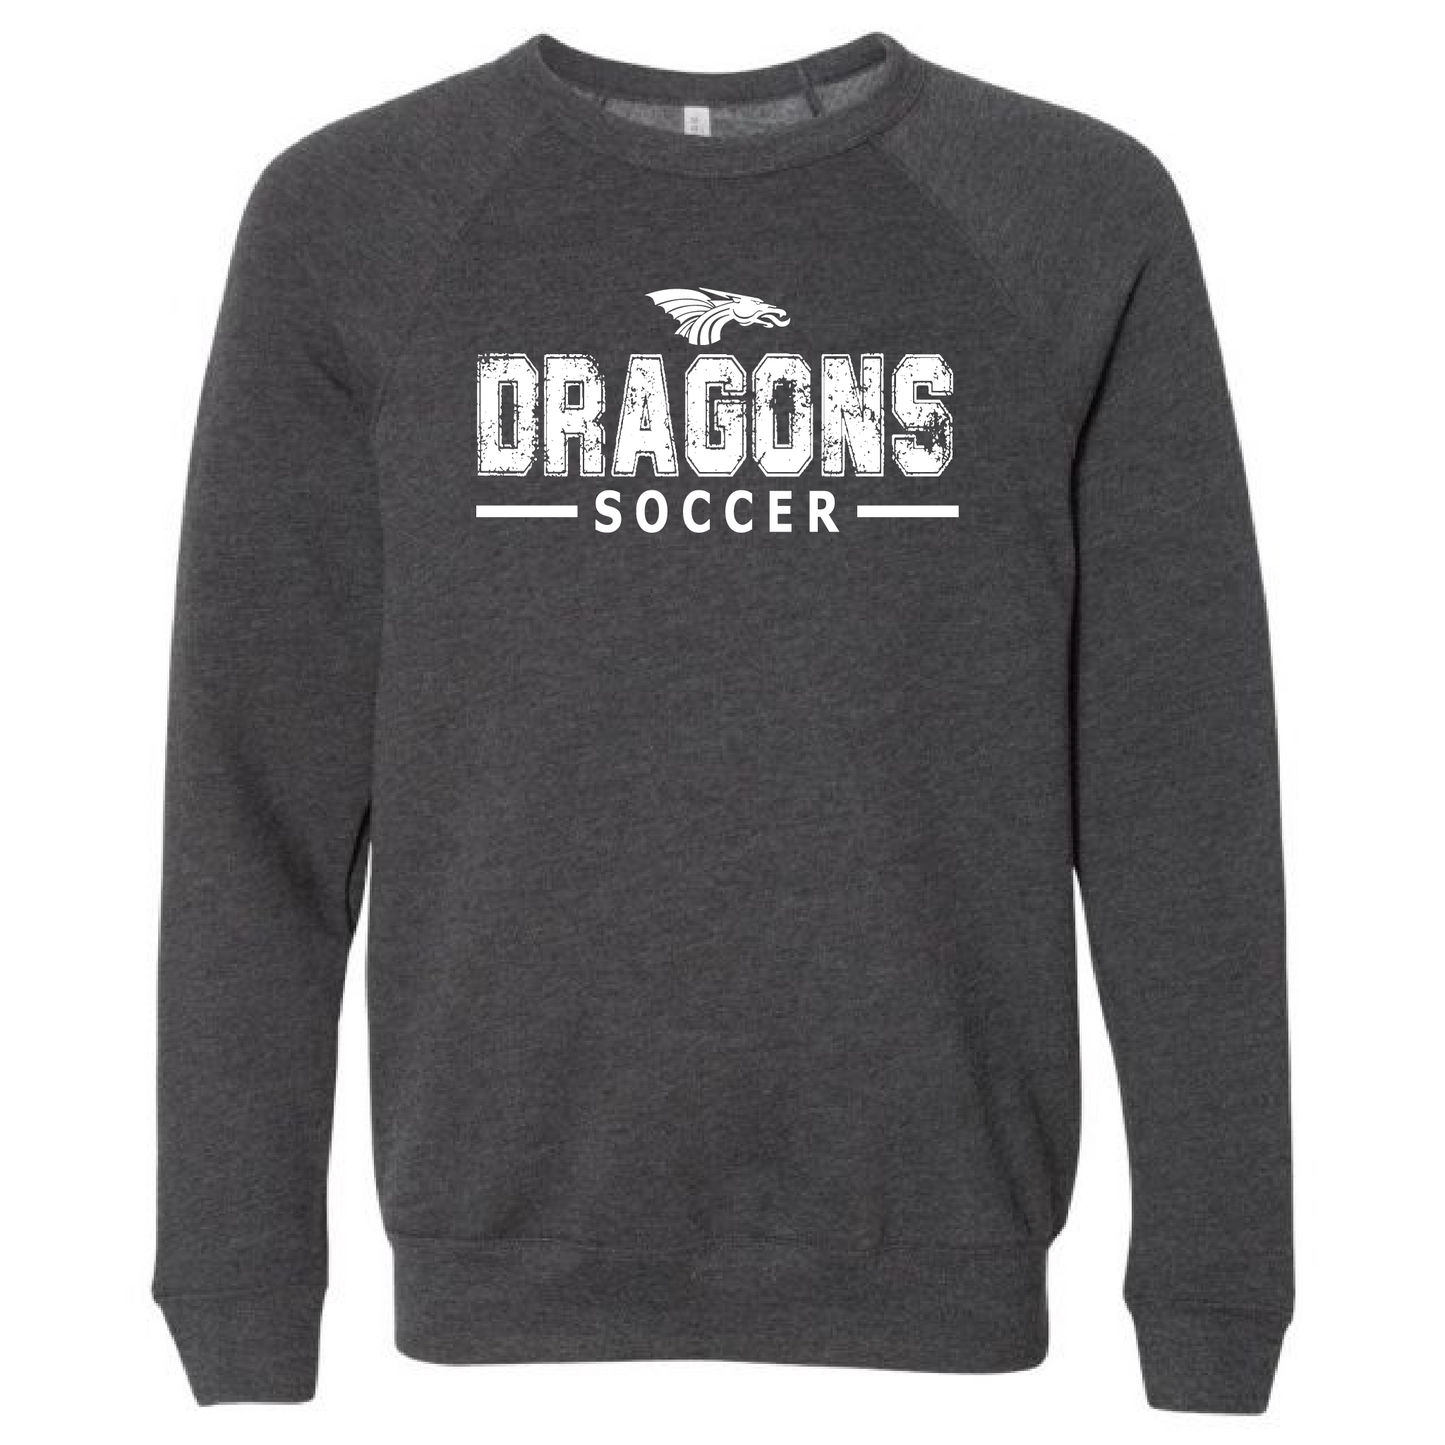 Unisex Sweatshirt - Dragons Soccer